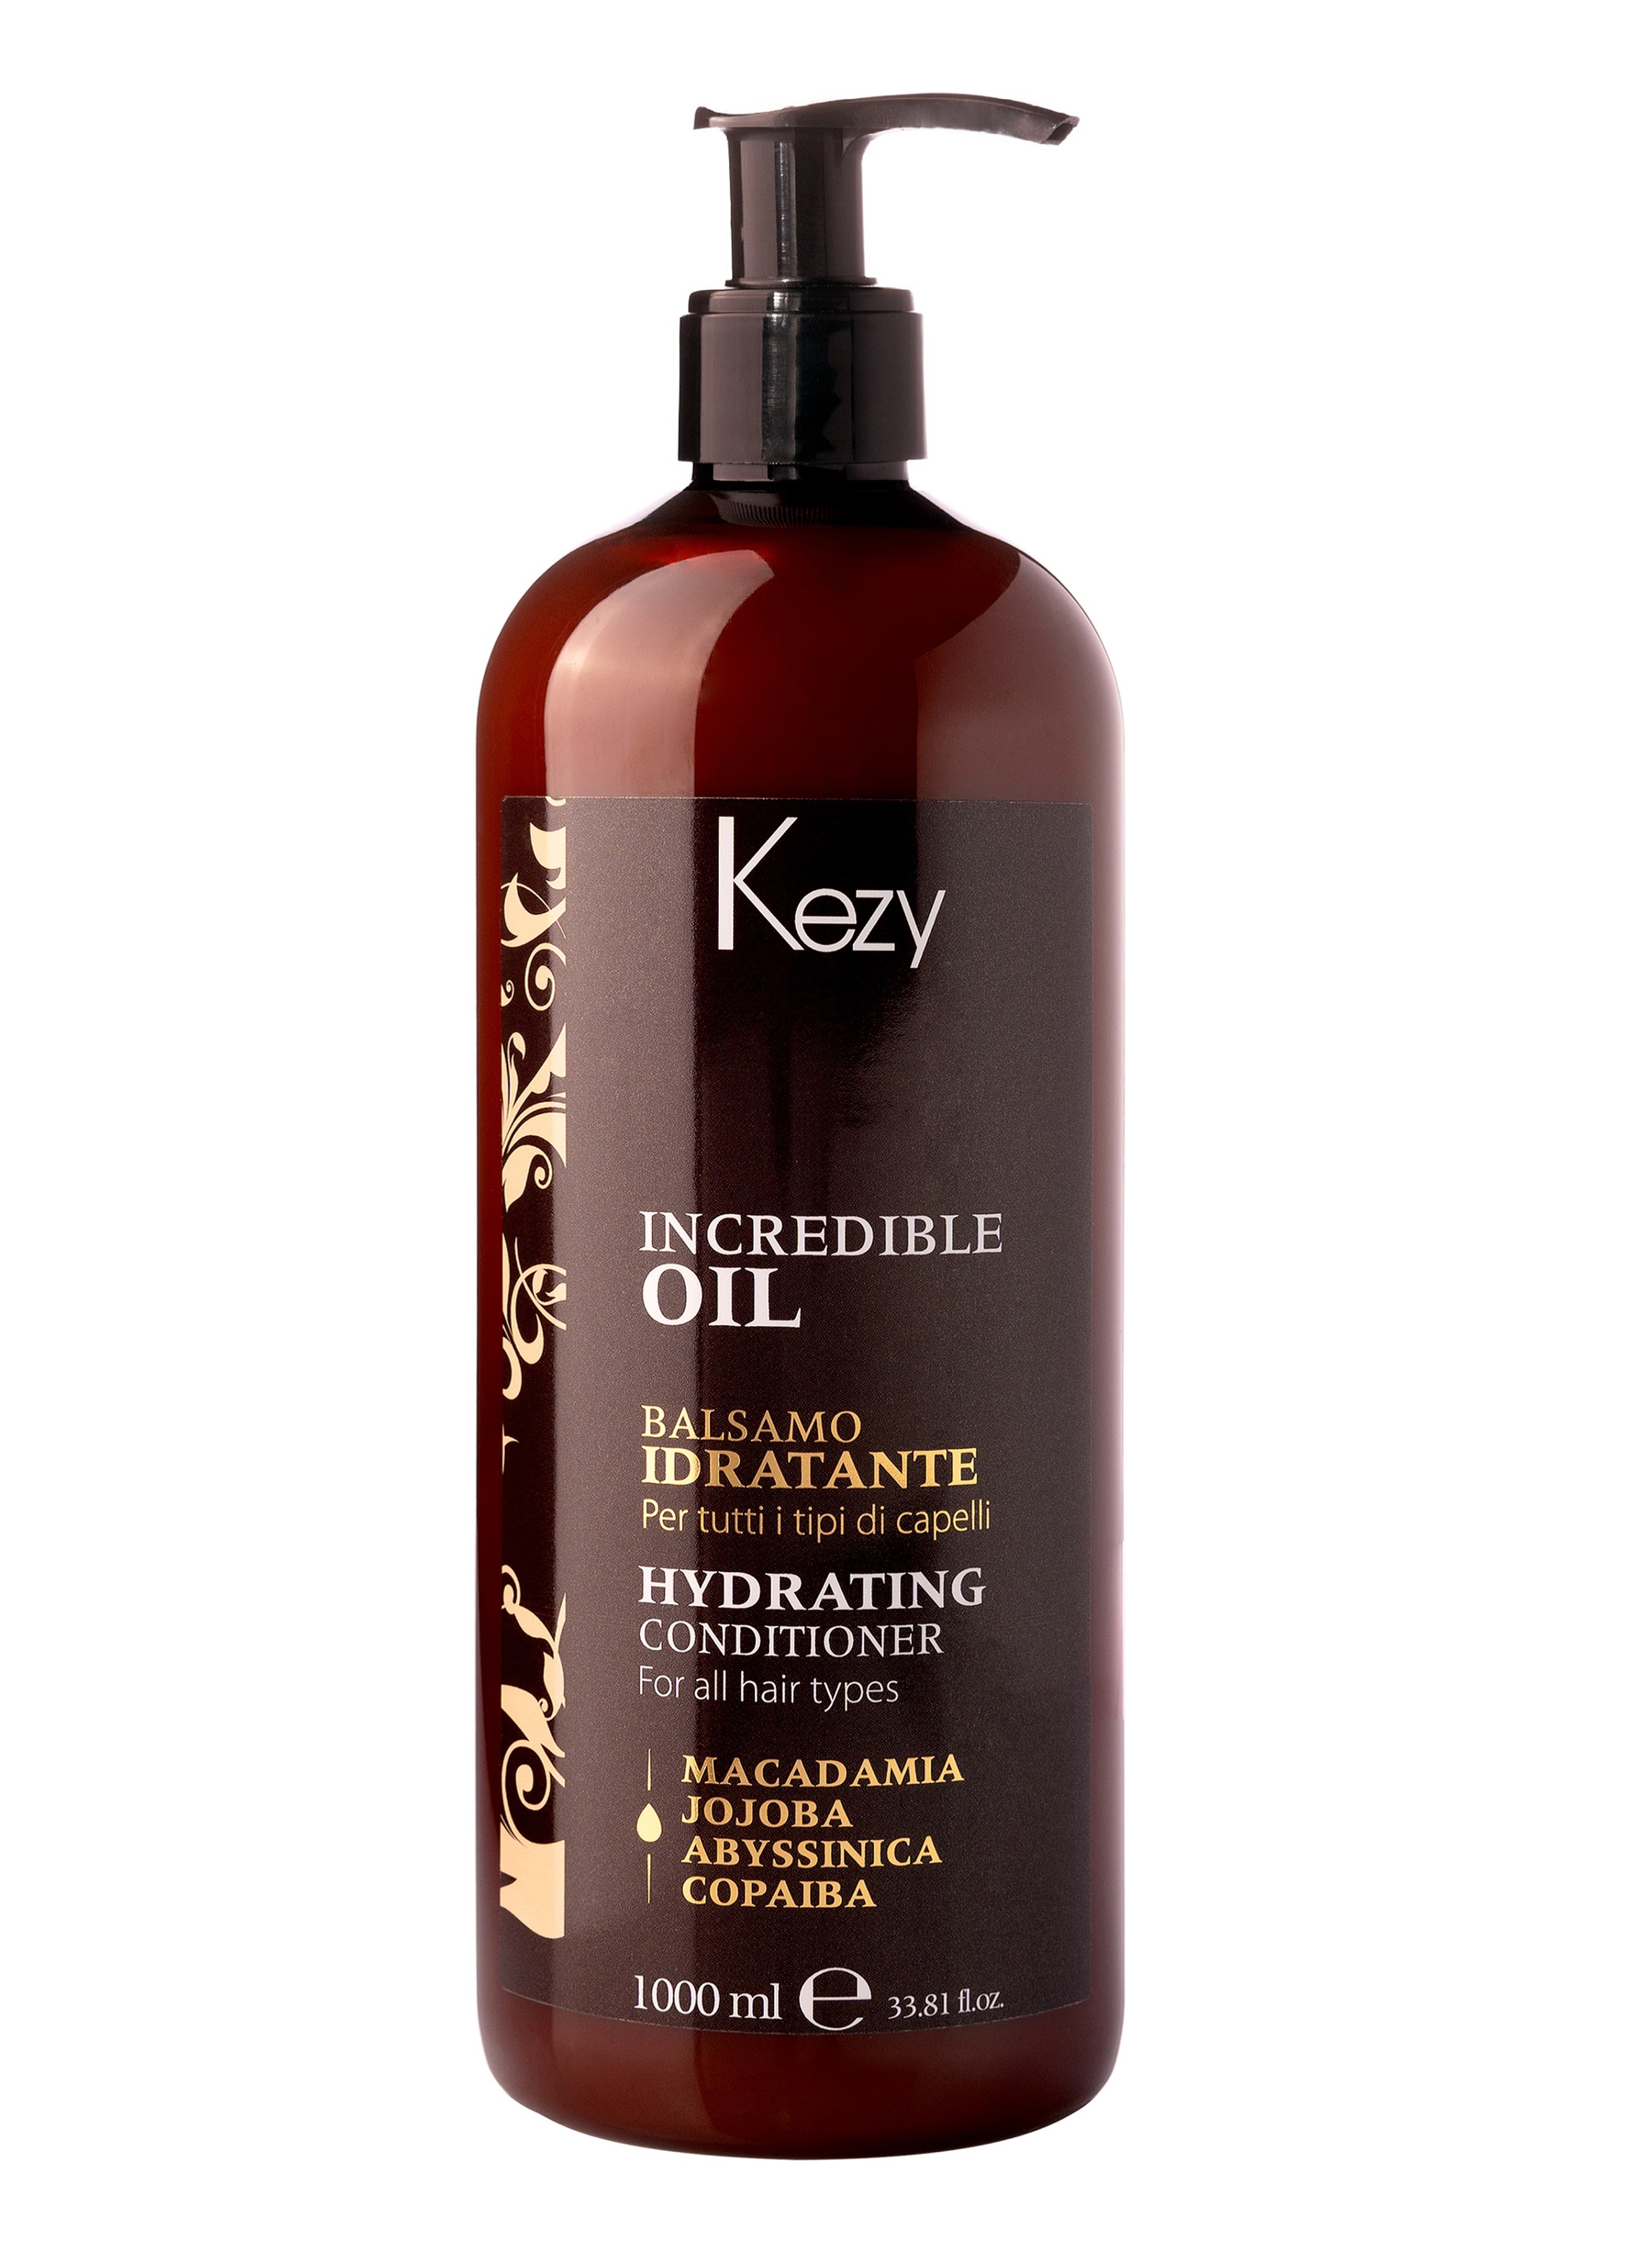 Кондиционер KEZY для всех типов волос увлажняющий 1000мл, Линия INCREDIBLE OIL